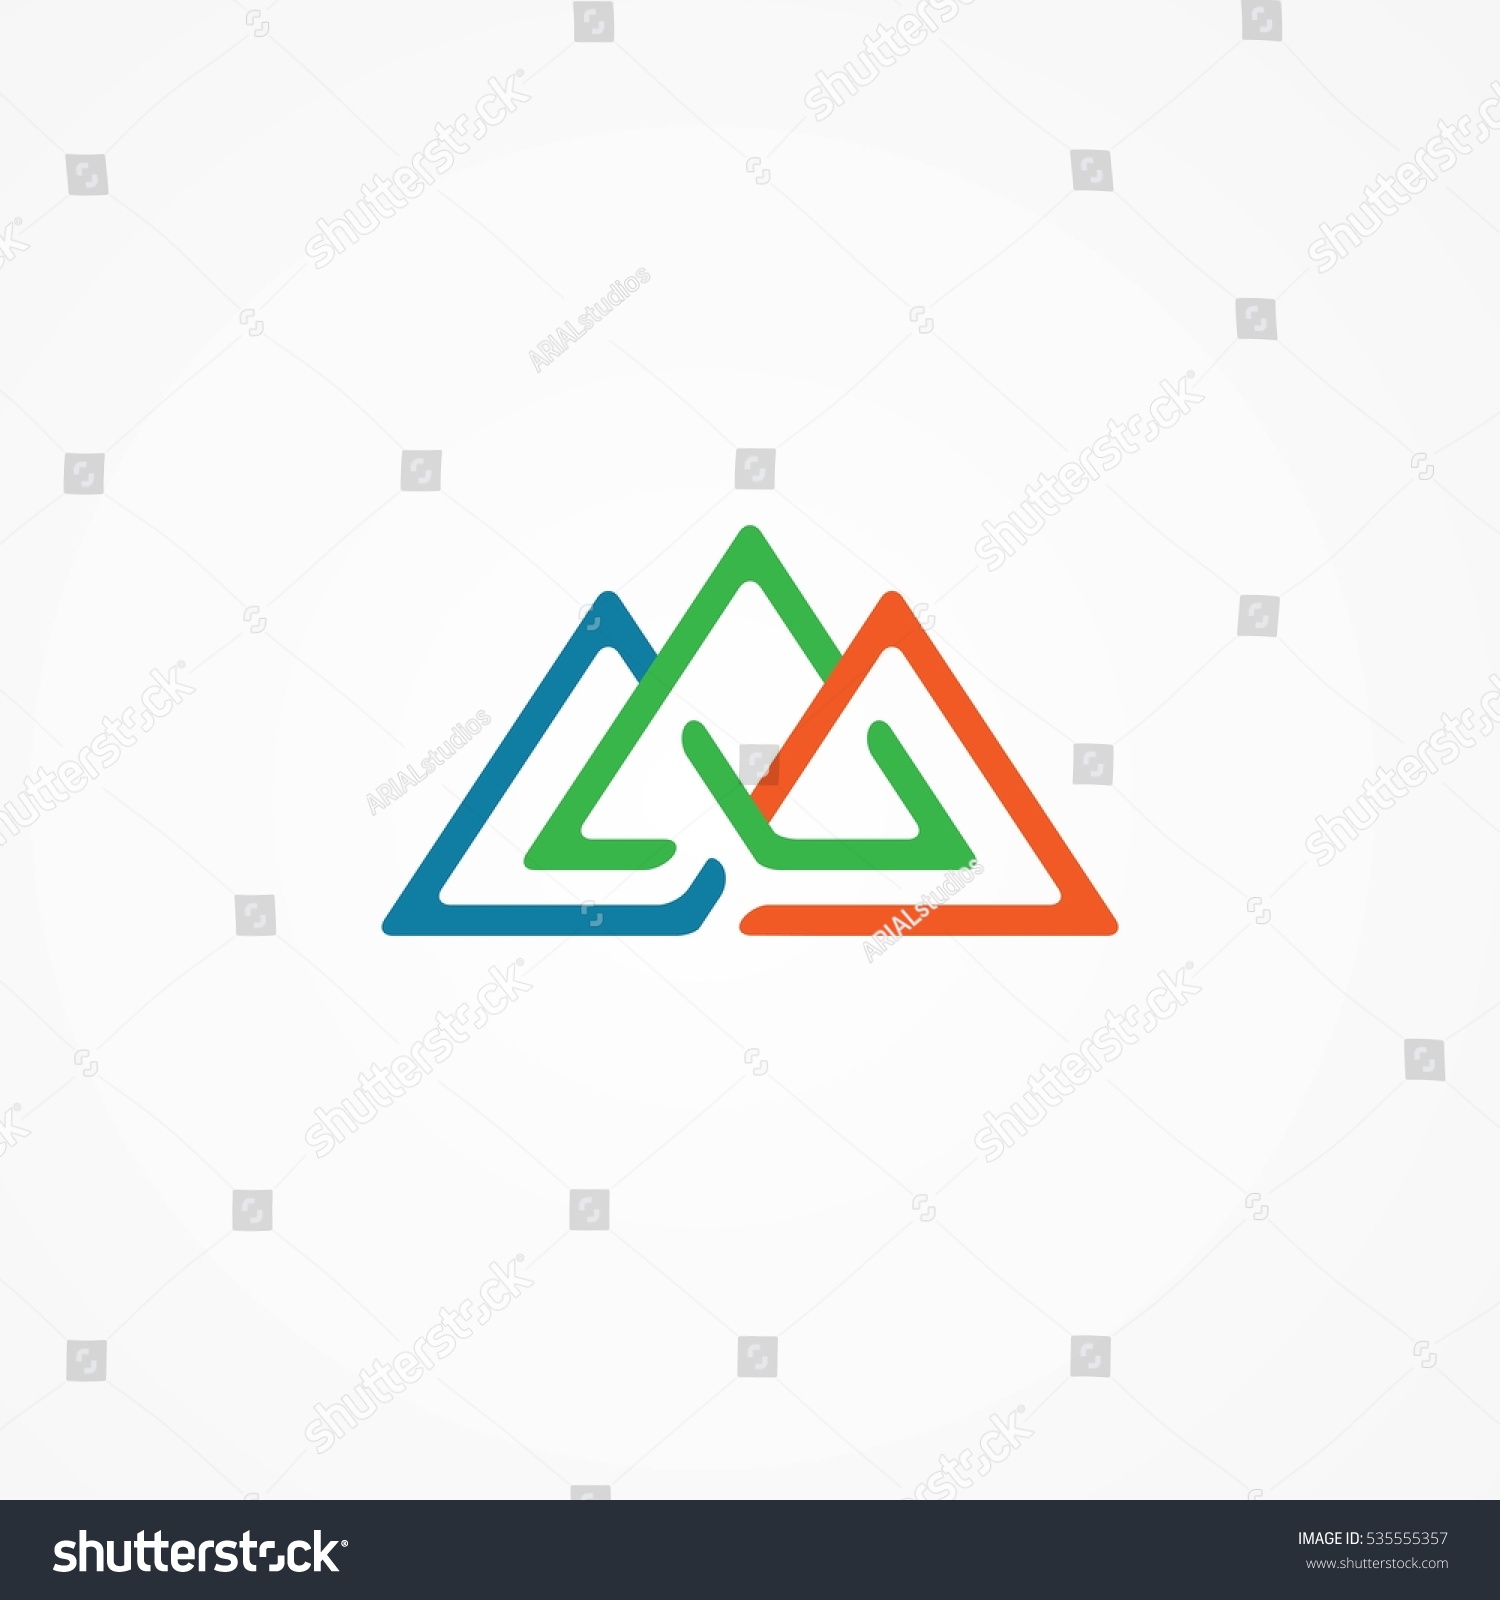 Triangle Logo Designs Stock Vector 535555357 - Shutterstock